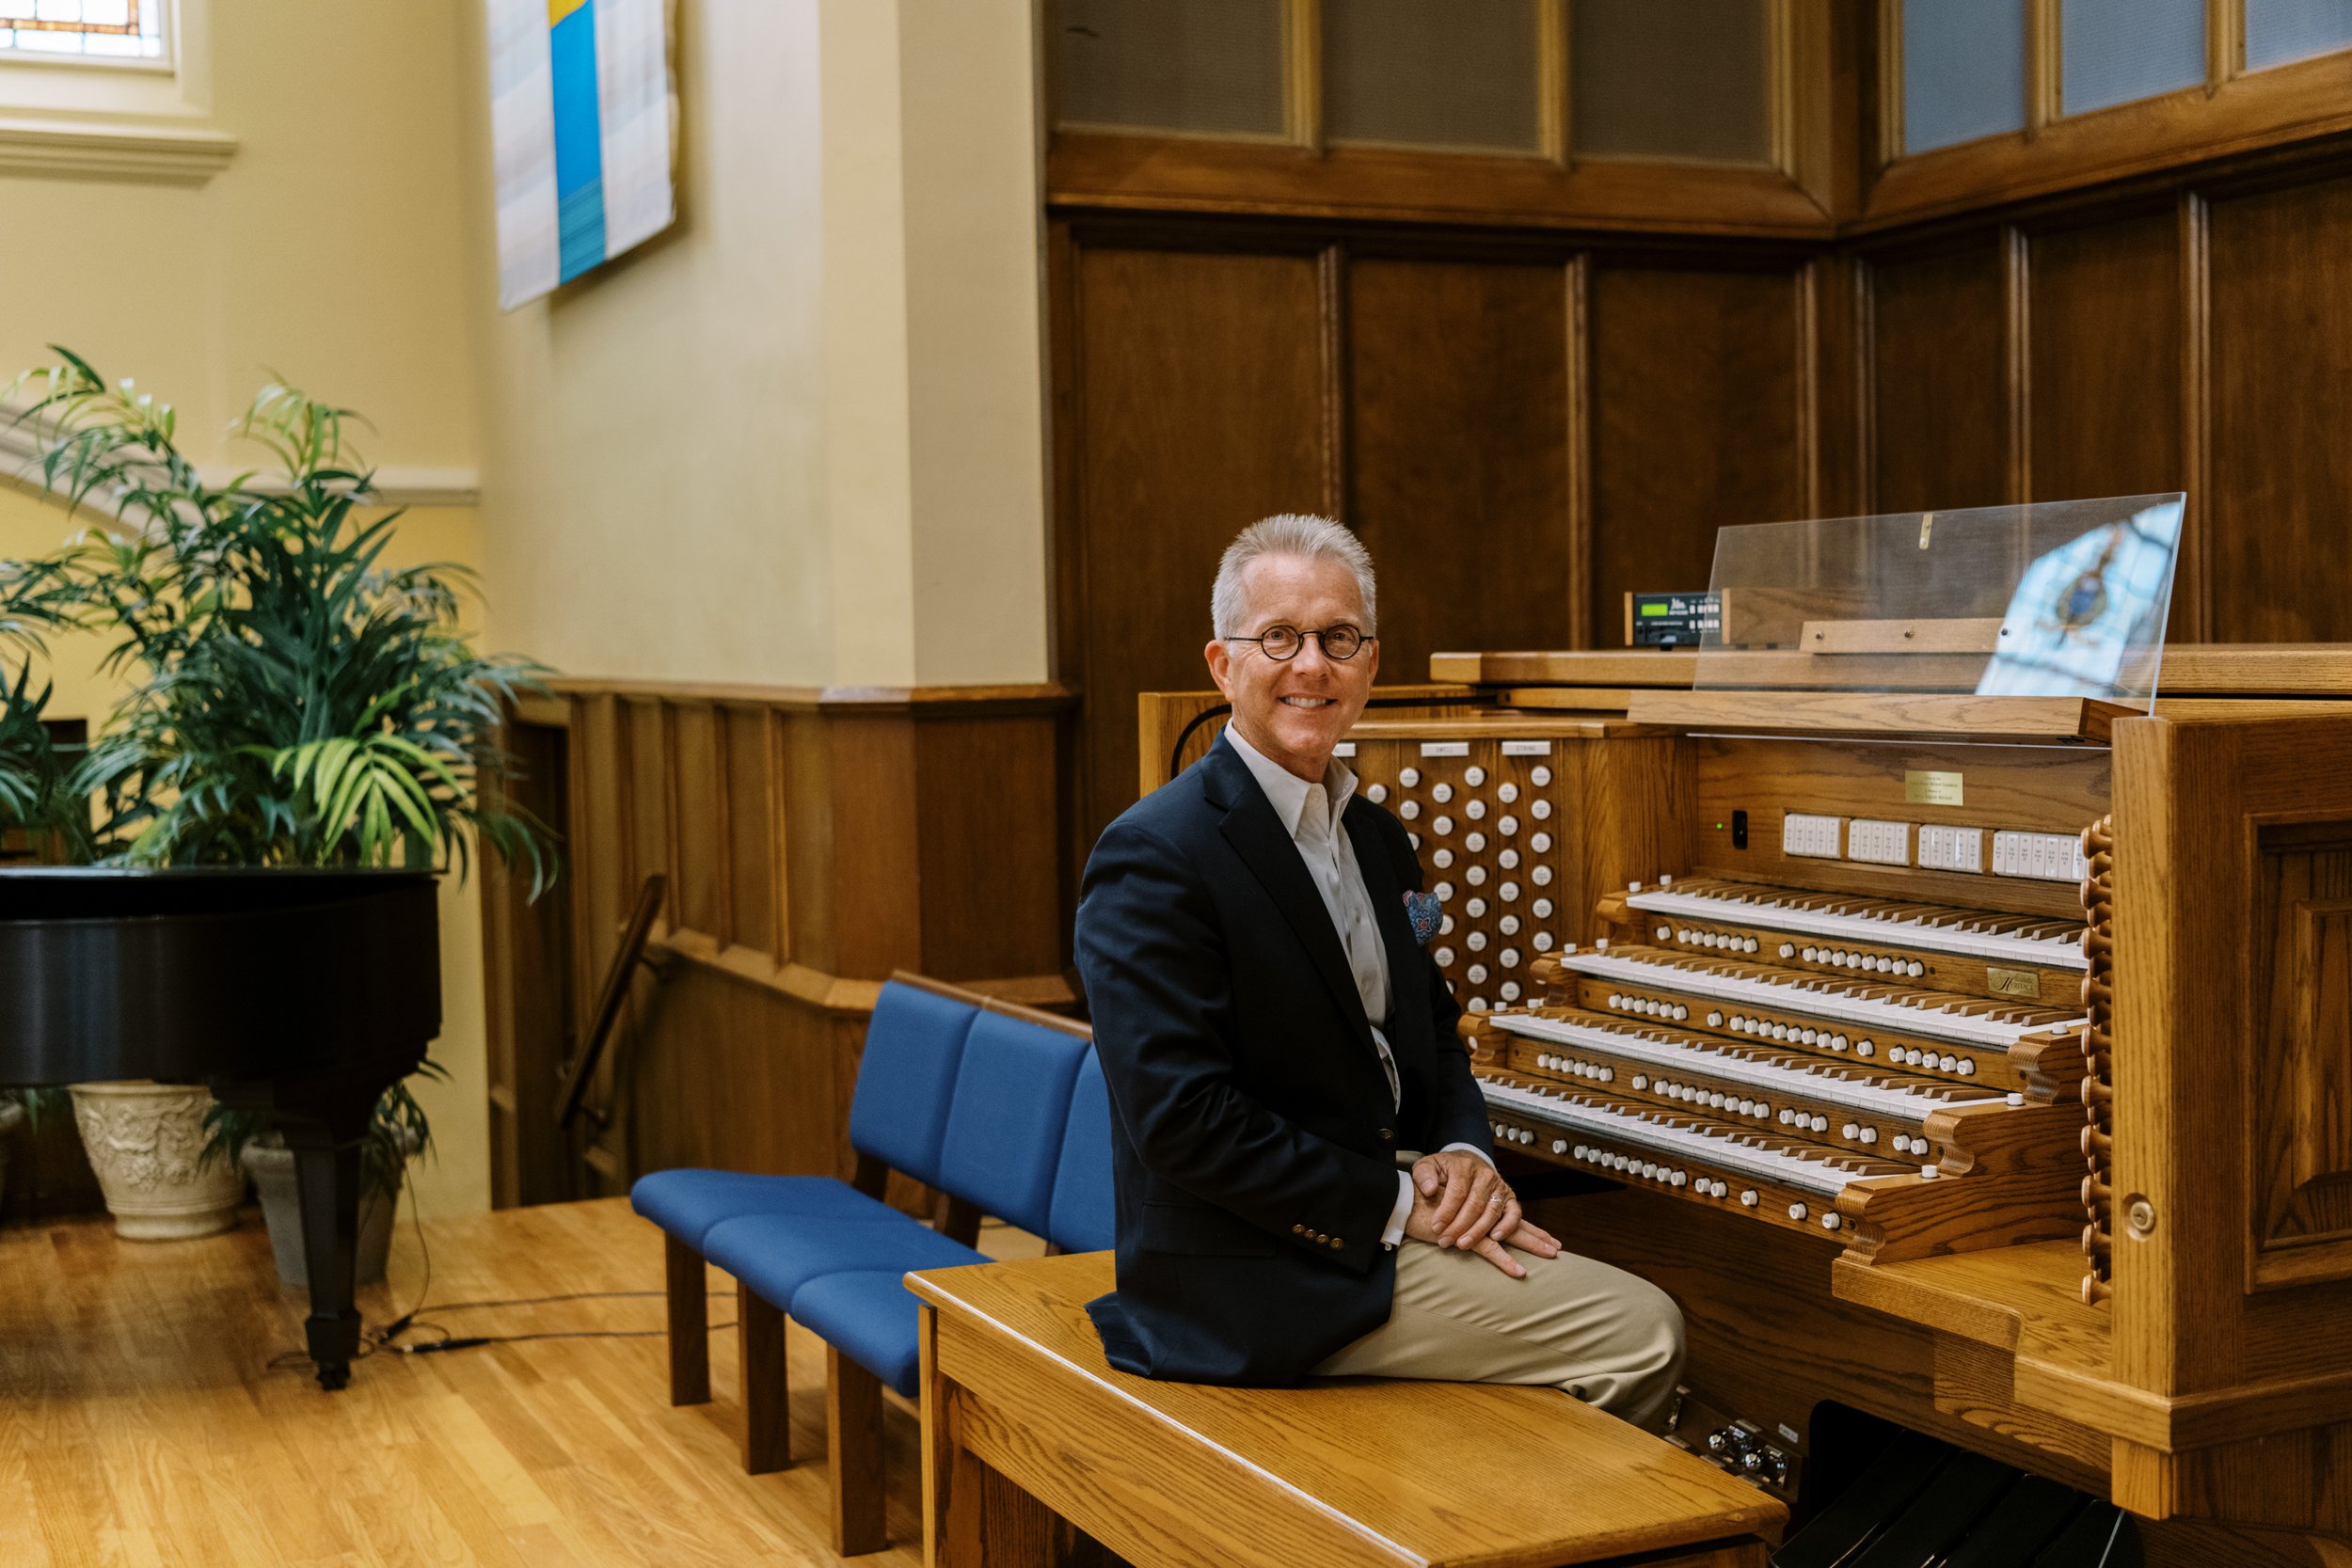 Maestro Organ July 2021.jpg